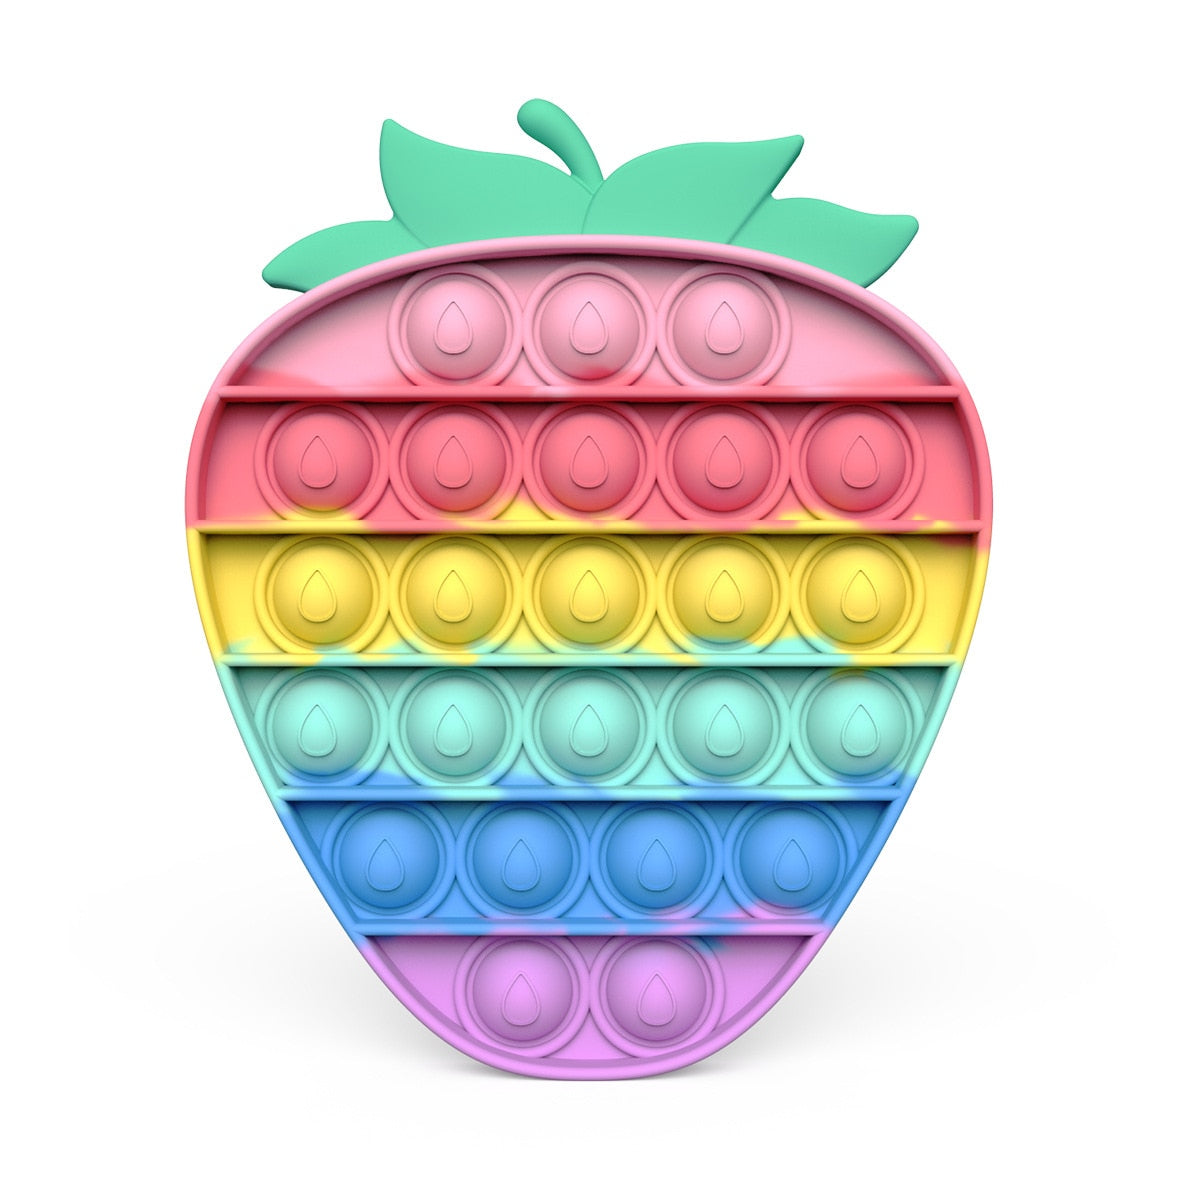 Rainbow Fruits & Animals Pop It Fidget Toys